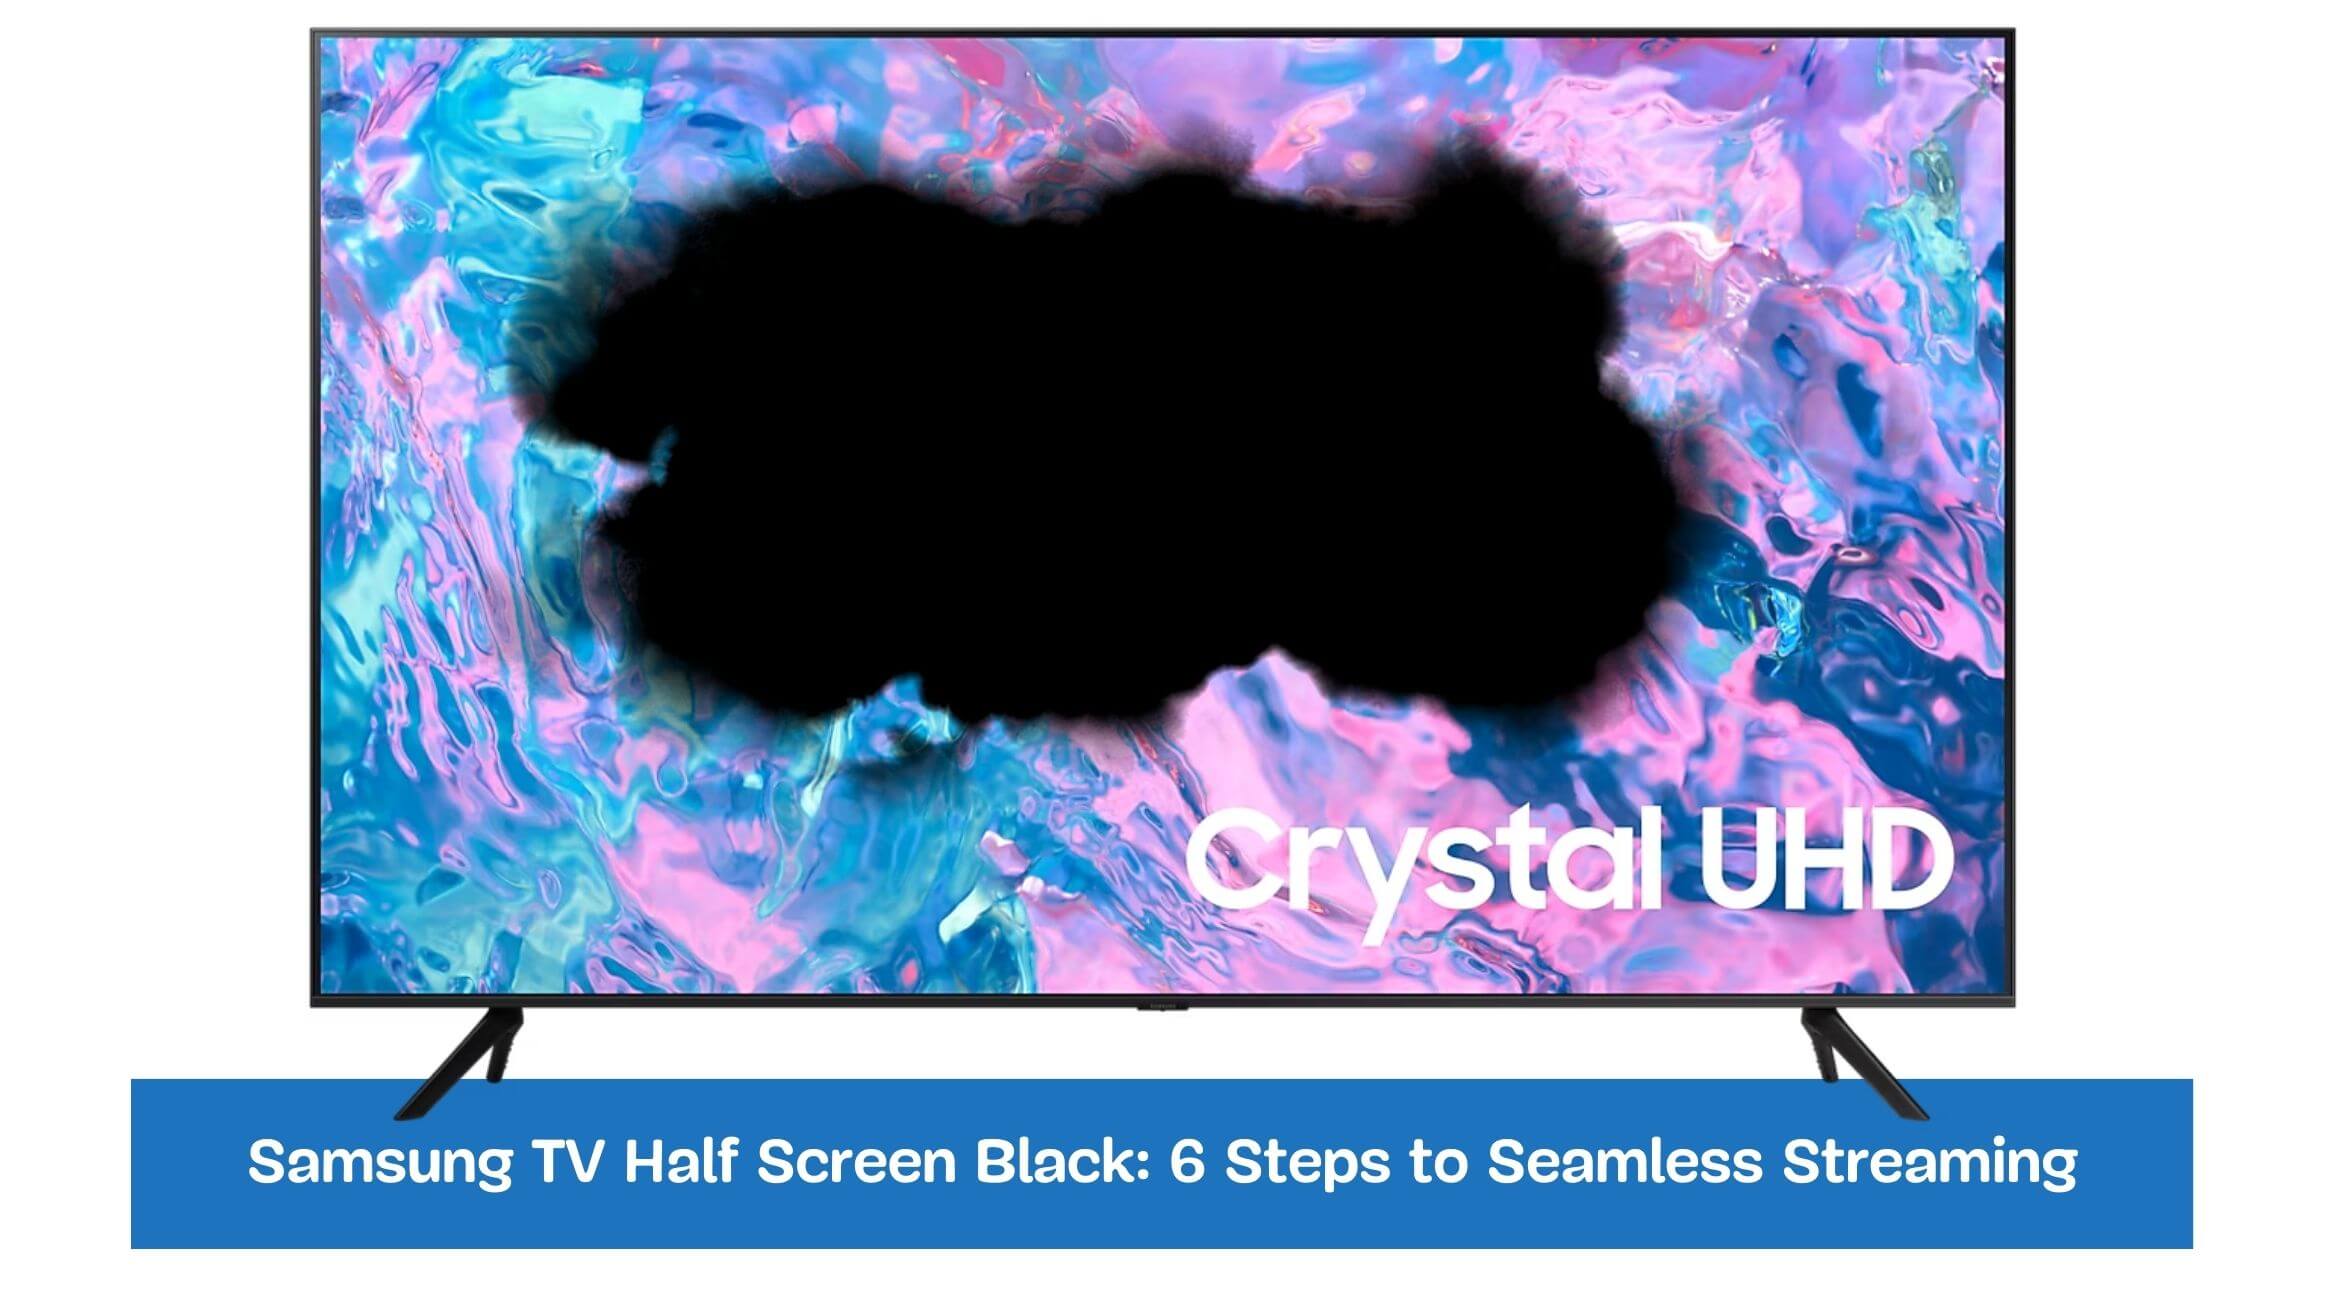 Samsung TV Half Screen Black: 6 Steps to Seamless Streaming